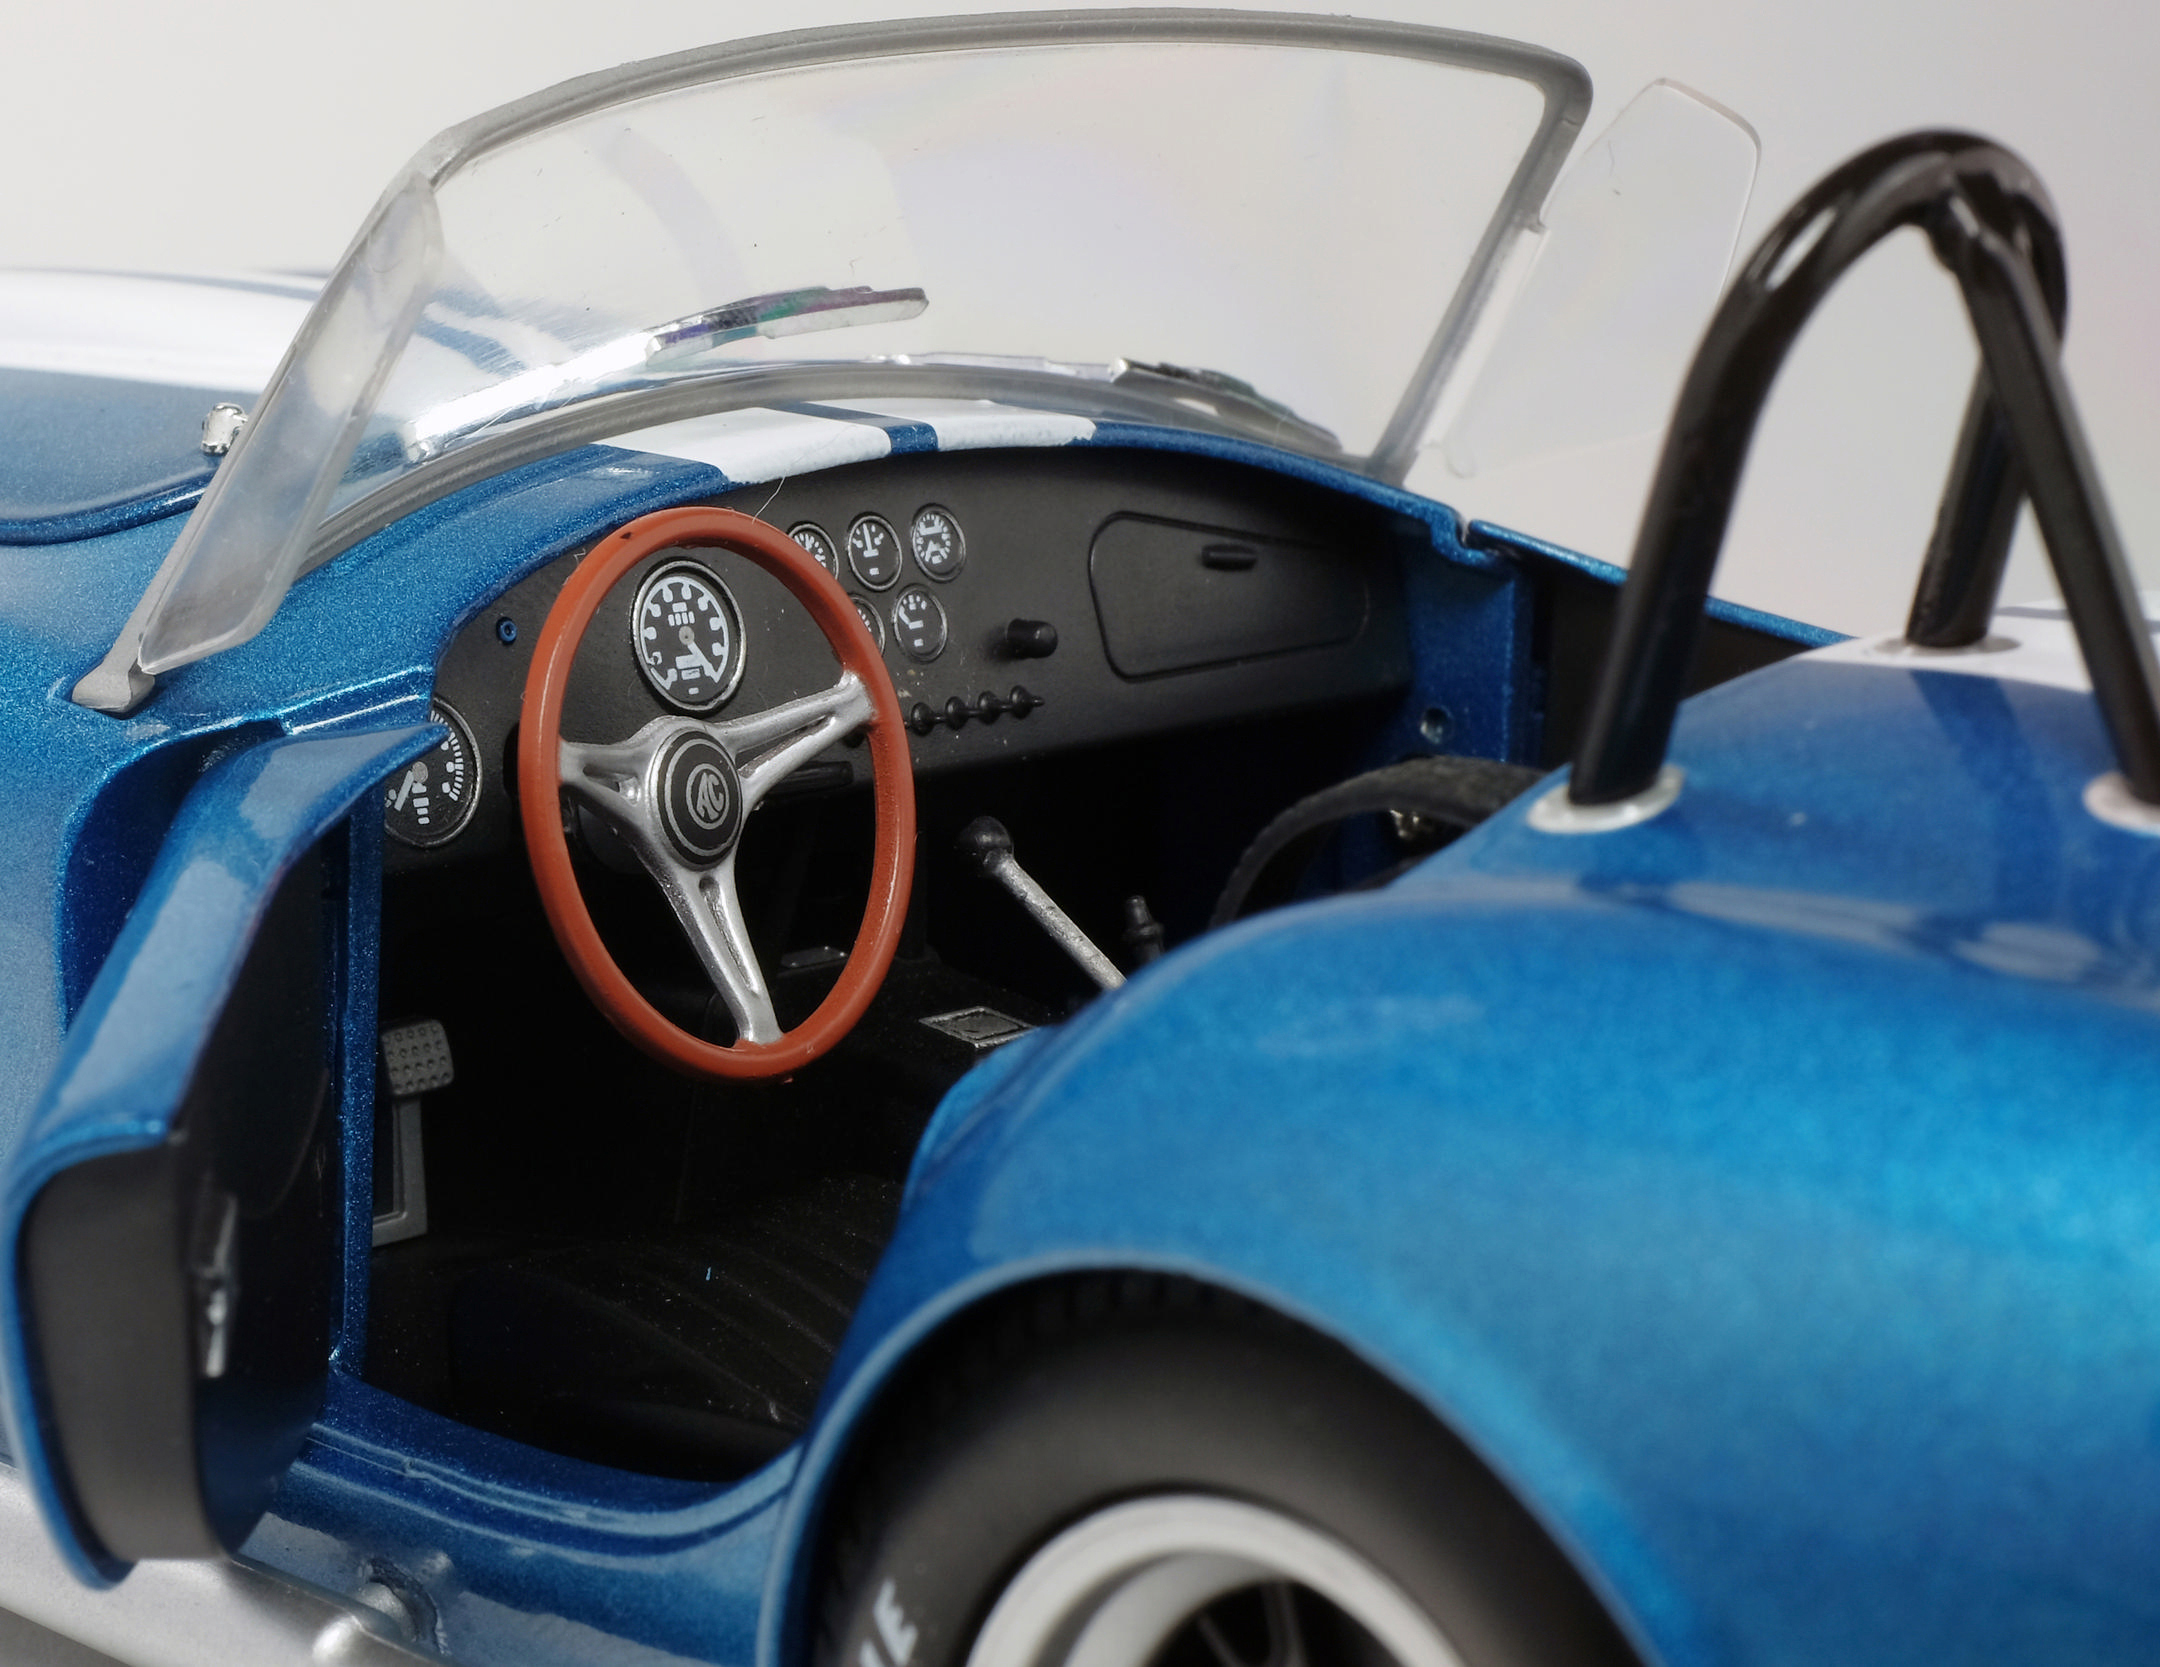 SOLIDO AC Metallic/Blau Maßstab 1:18, Modellauto, 1965, 427 Spielzeugmodellauto Baujahr blau MKII, metallic Cobra